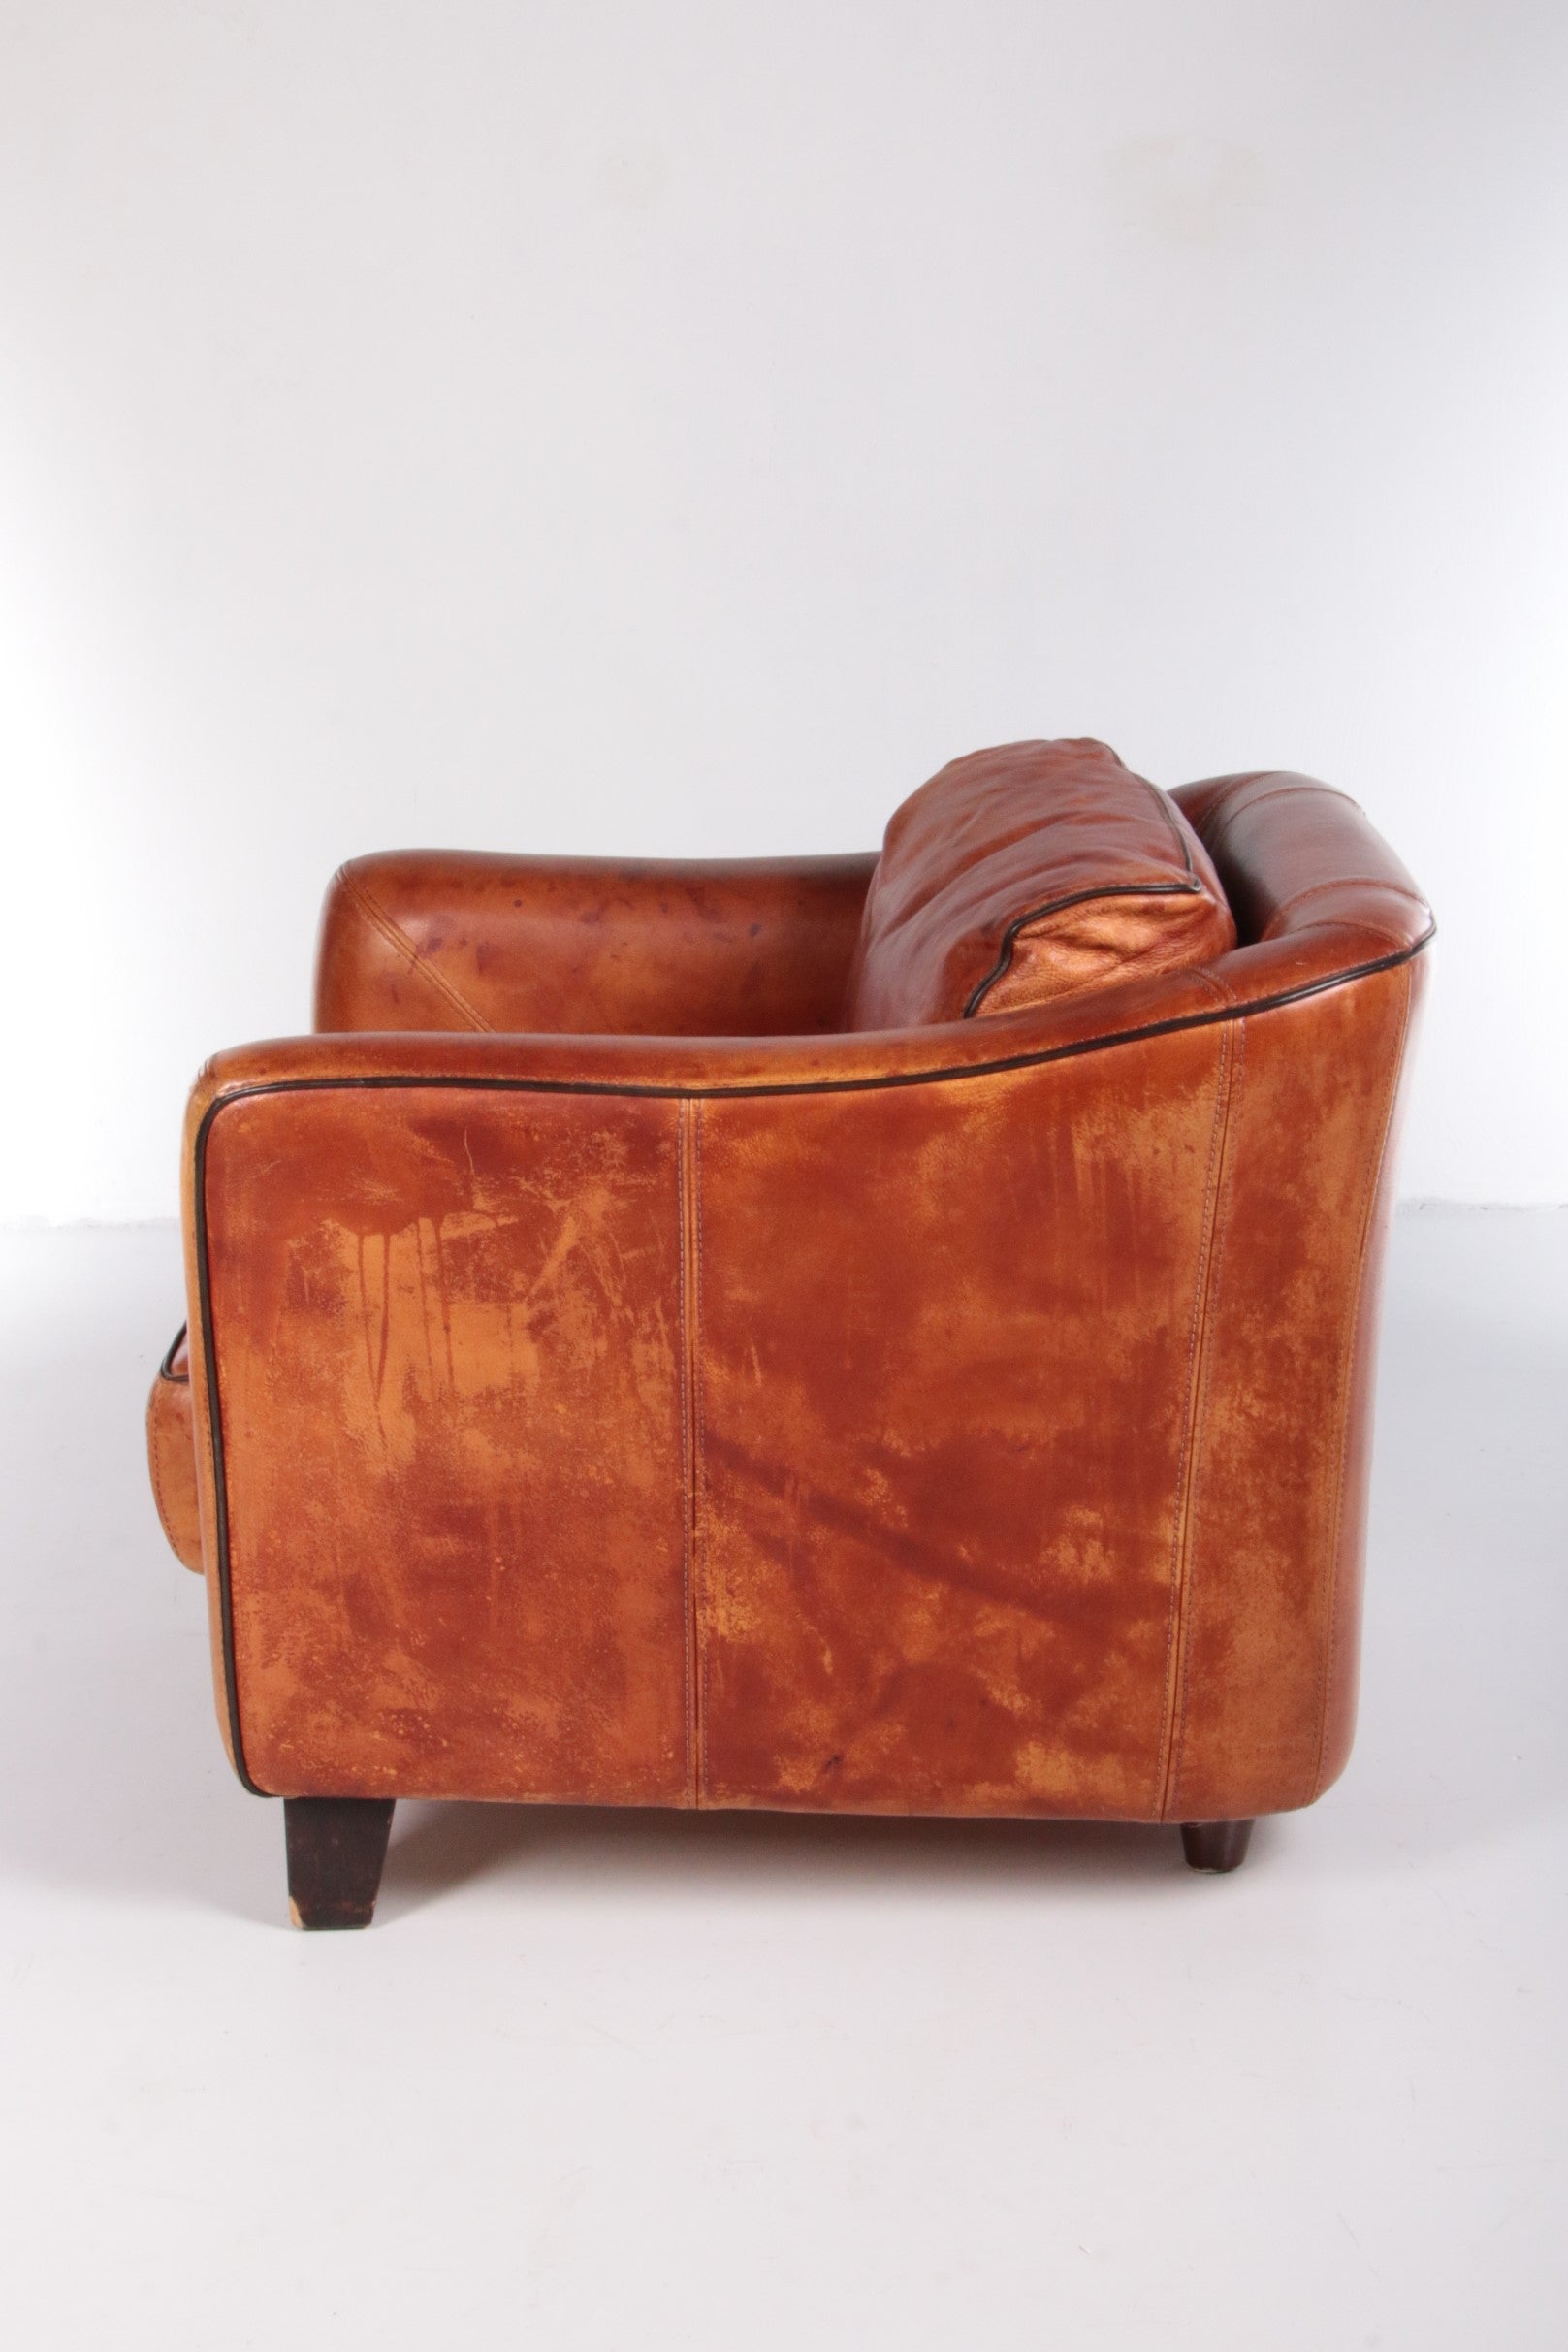 Italiaanse stierenhuiden relax fauteuil merk Baxter